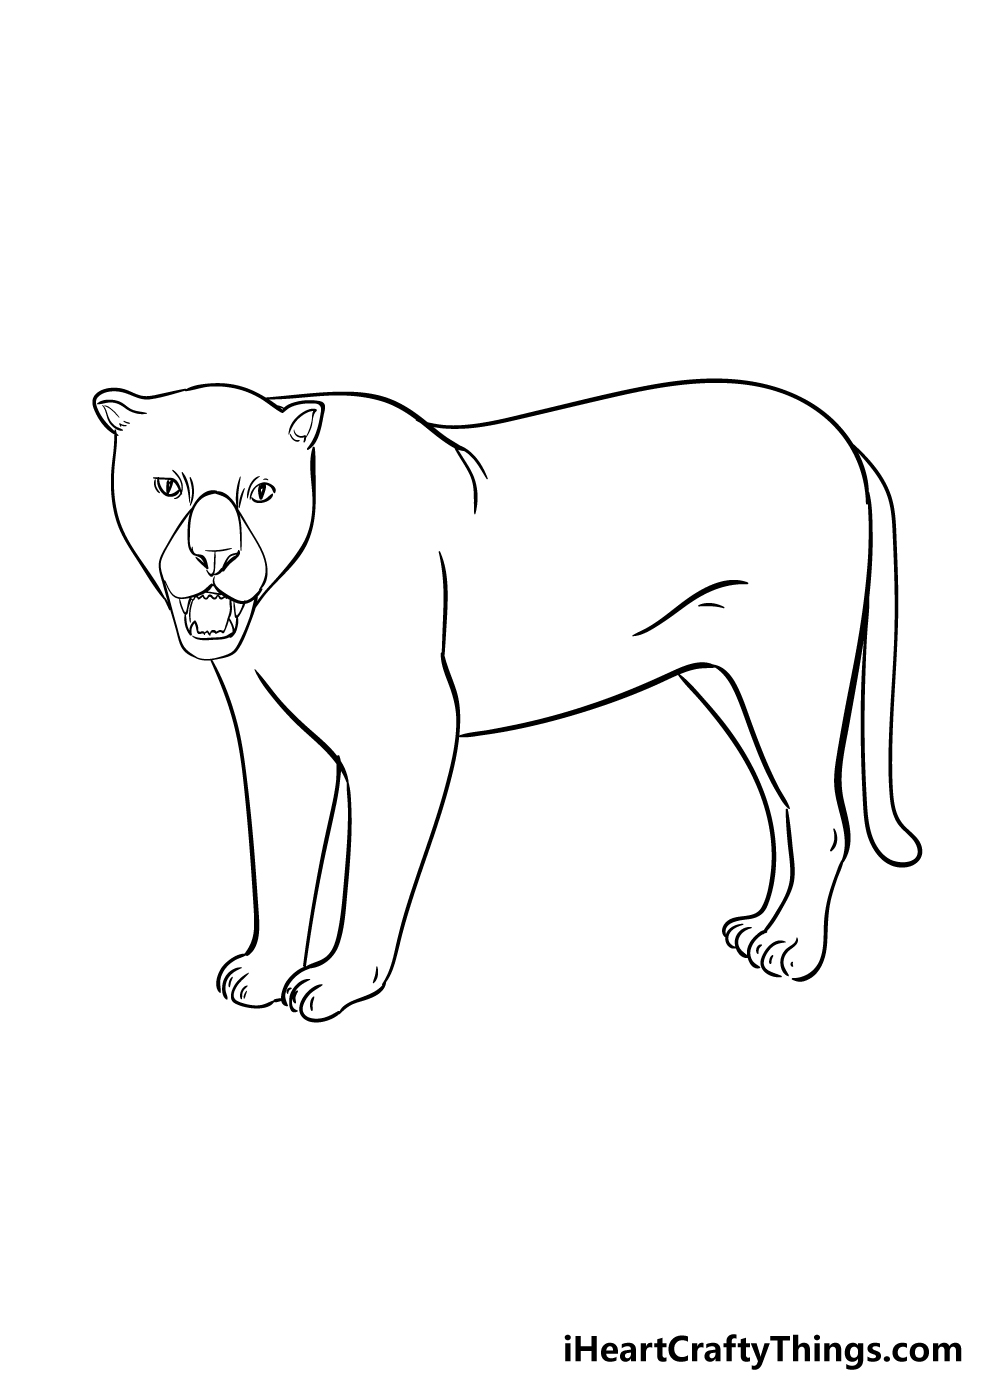 Easy drawings of jaguars